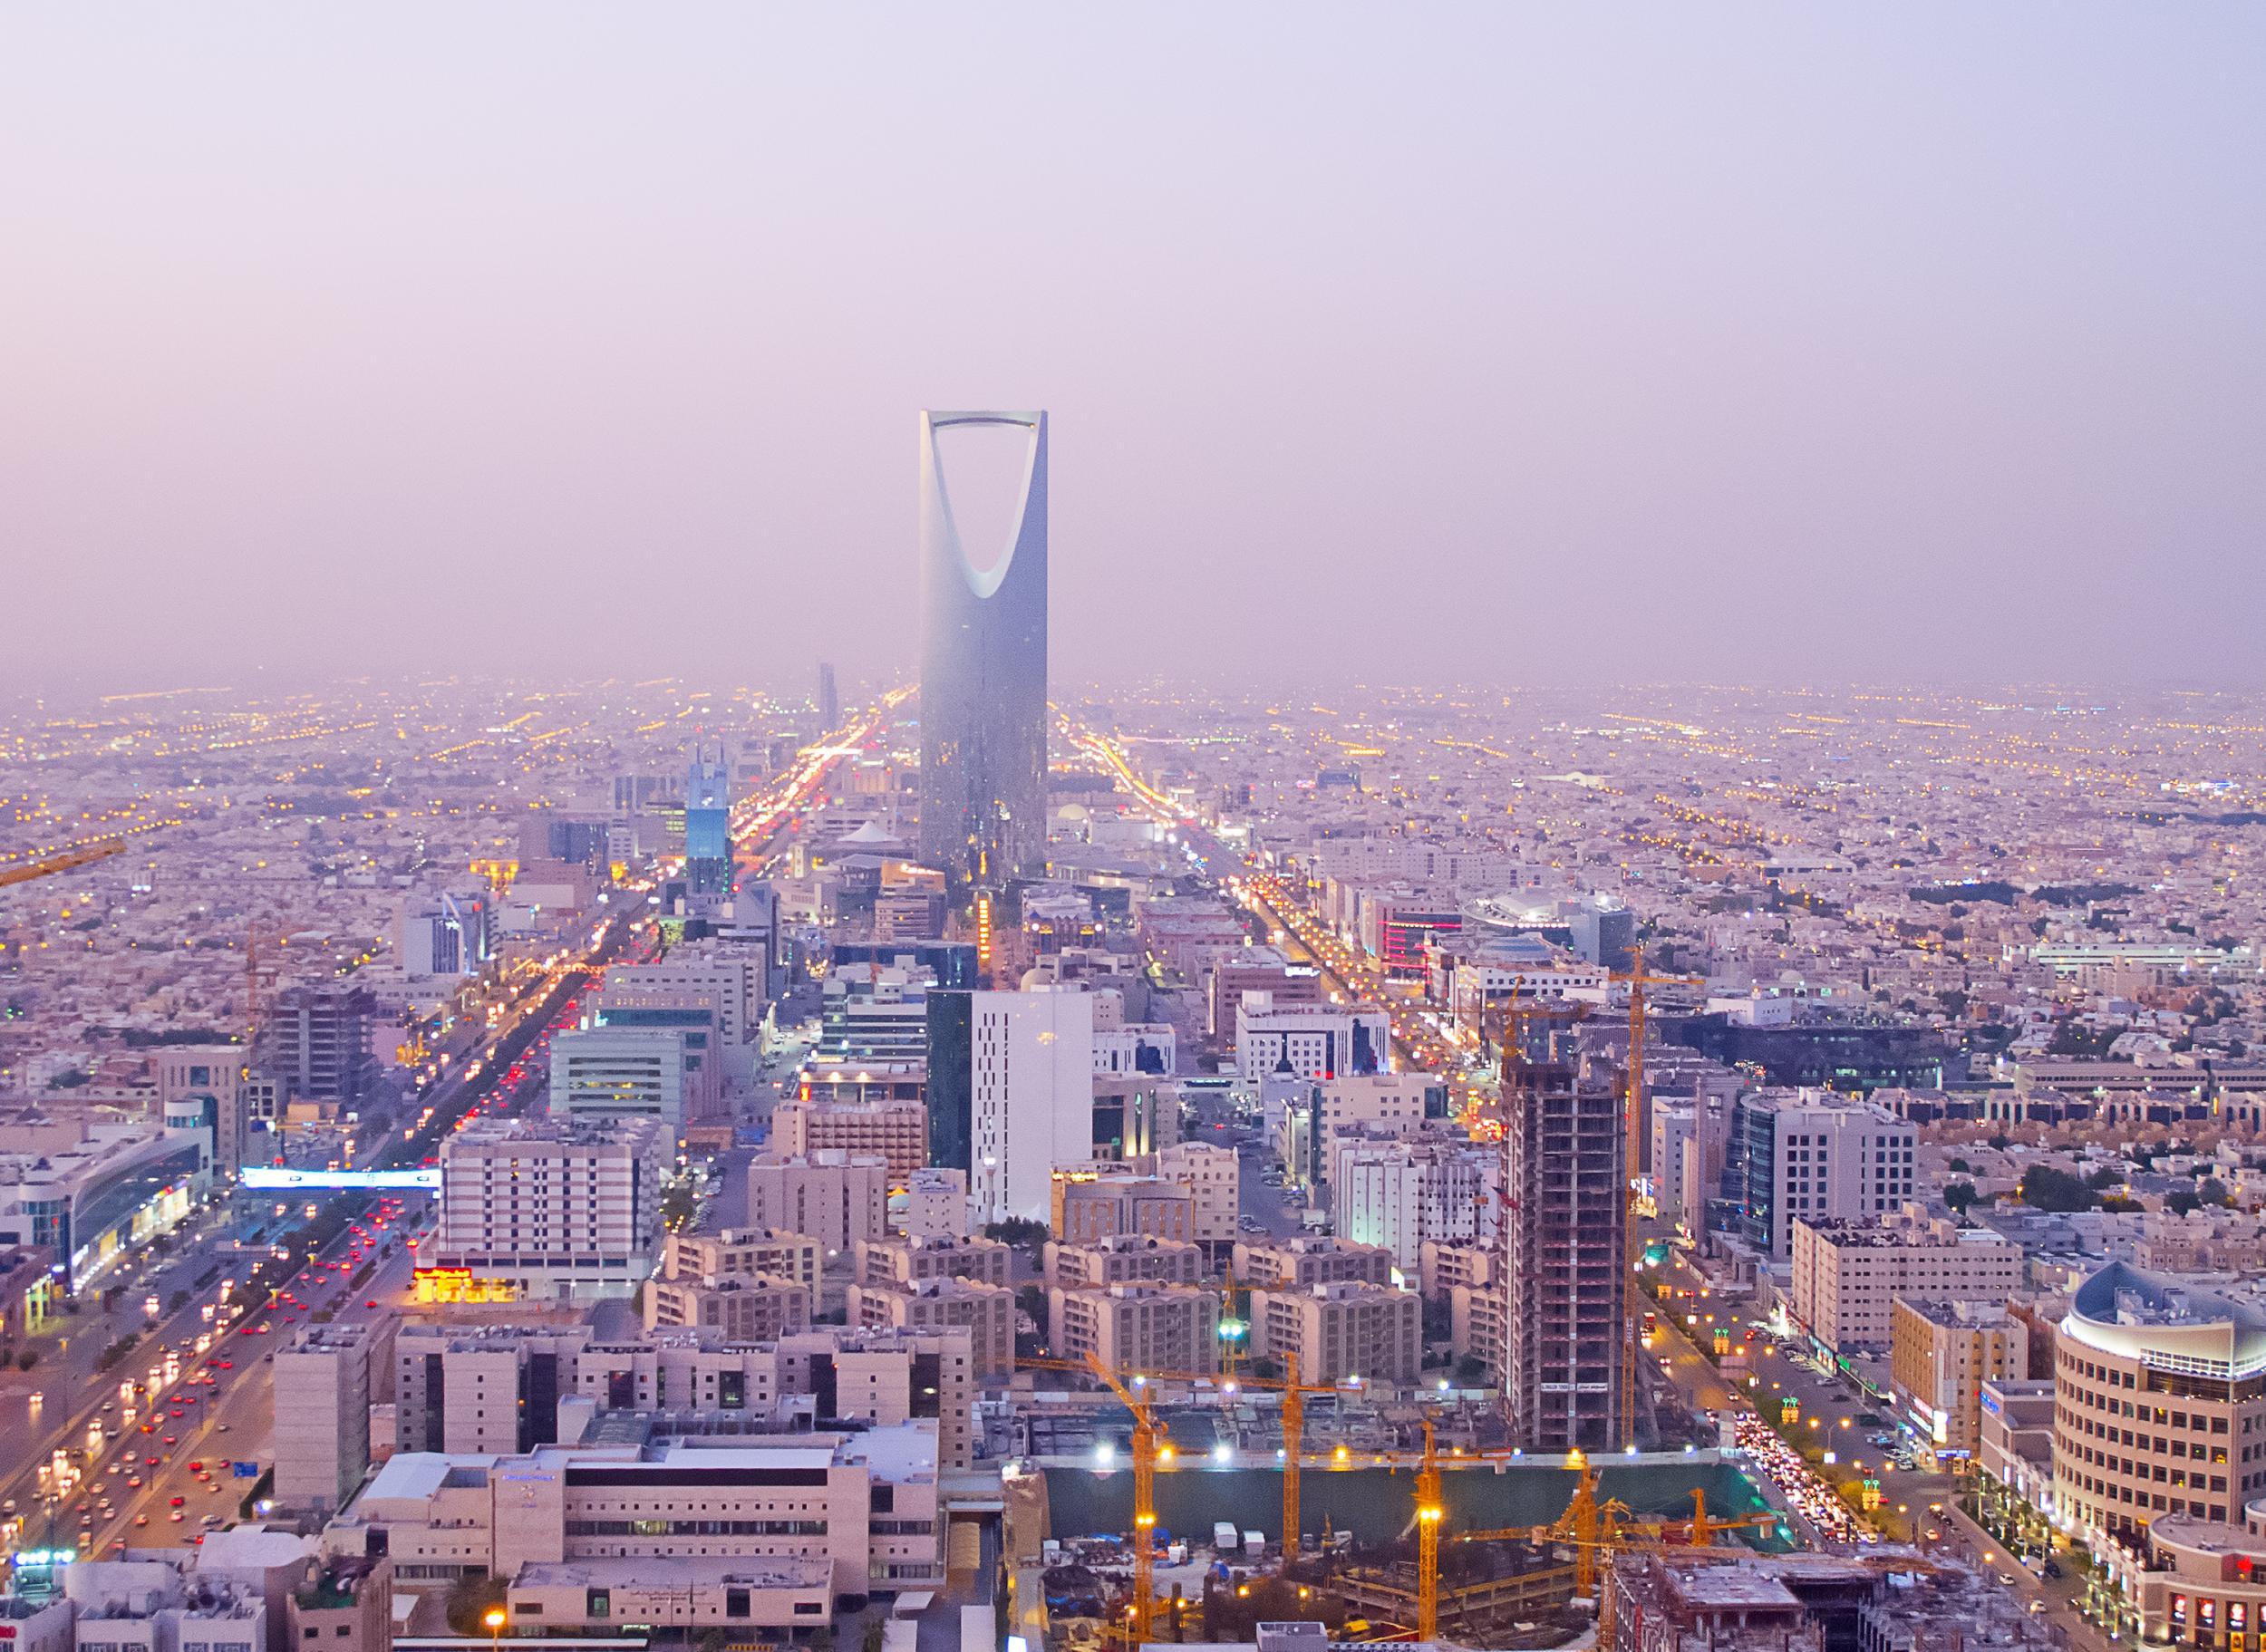 Saudi Arabia plans to introduce tourist visas in 2018